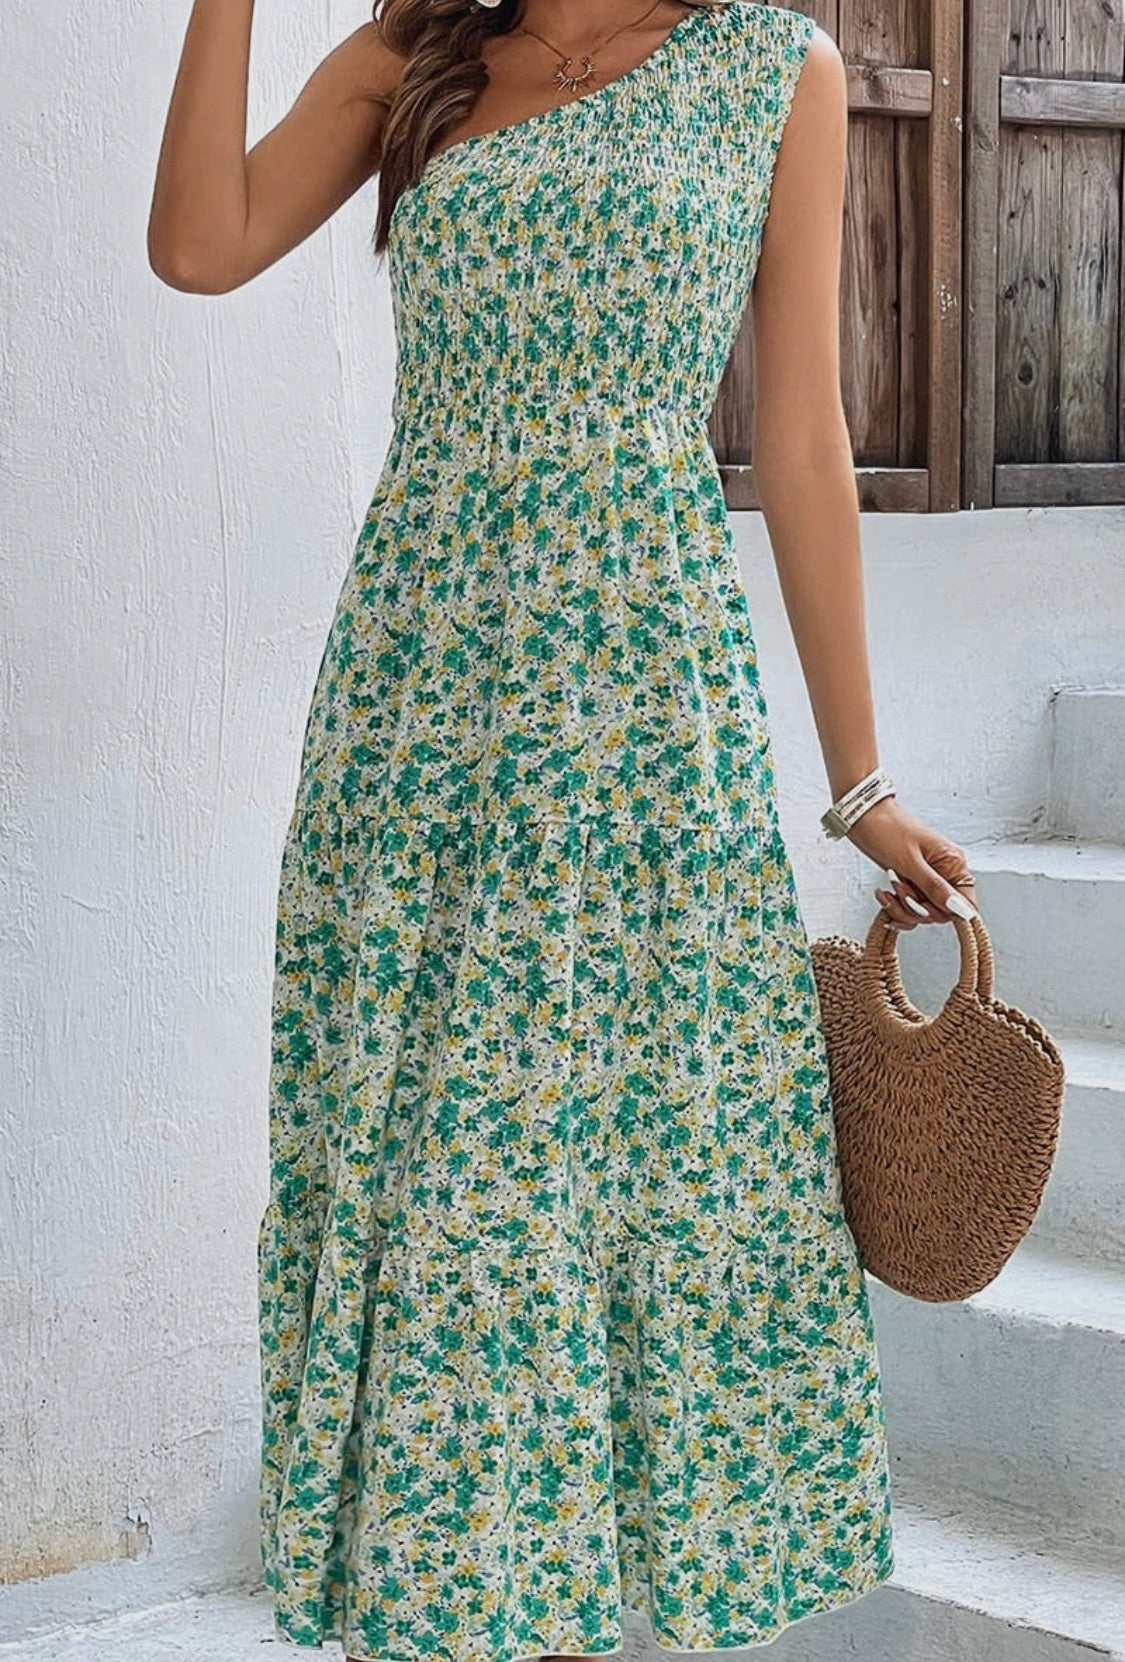 Get Ready Mint Green Floral Maxi Dress – Shop the Mint